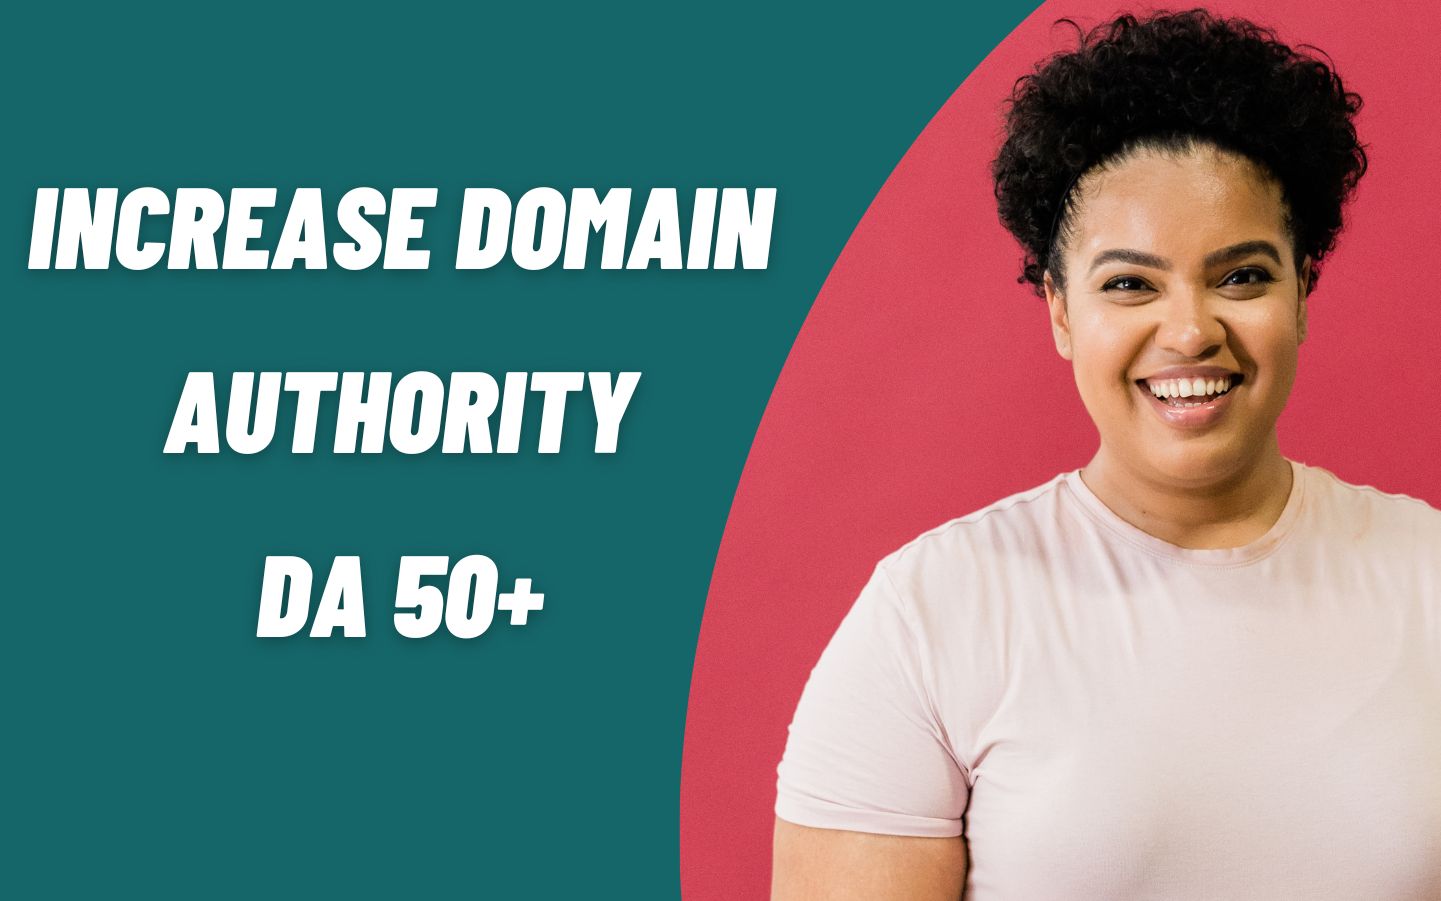 i will Increase domain authority DA UPTO 50 on Moz